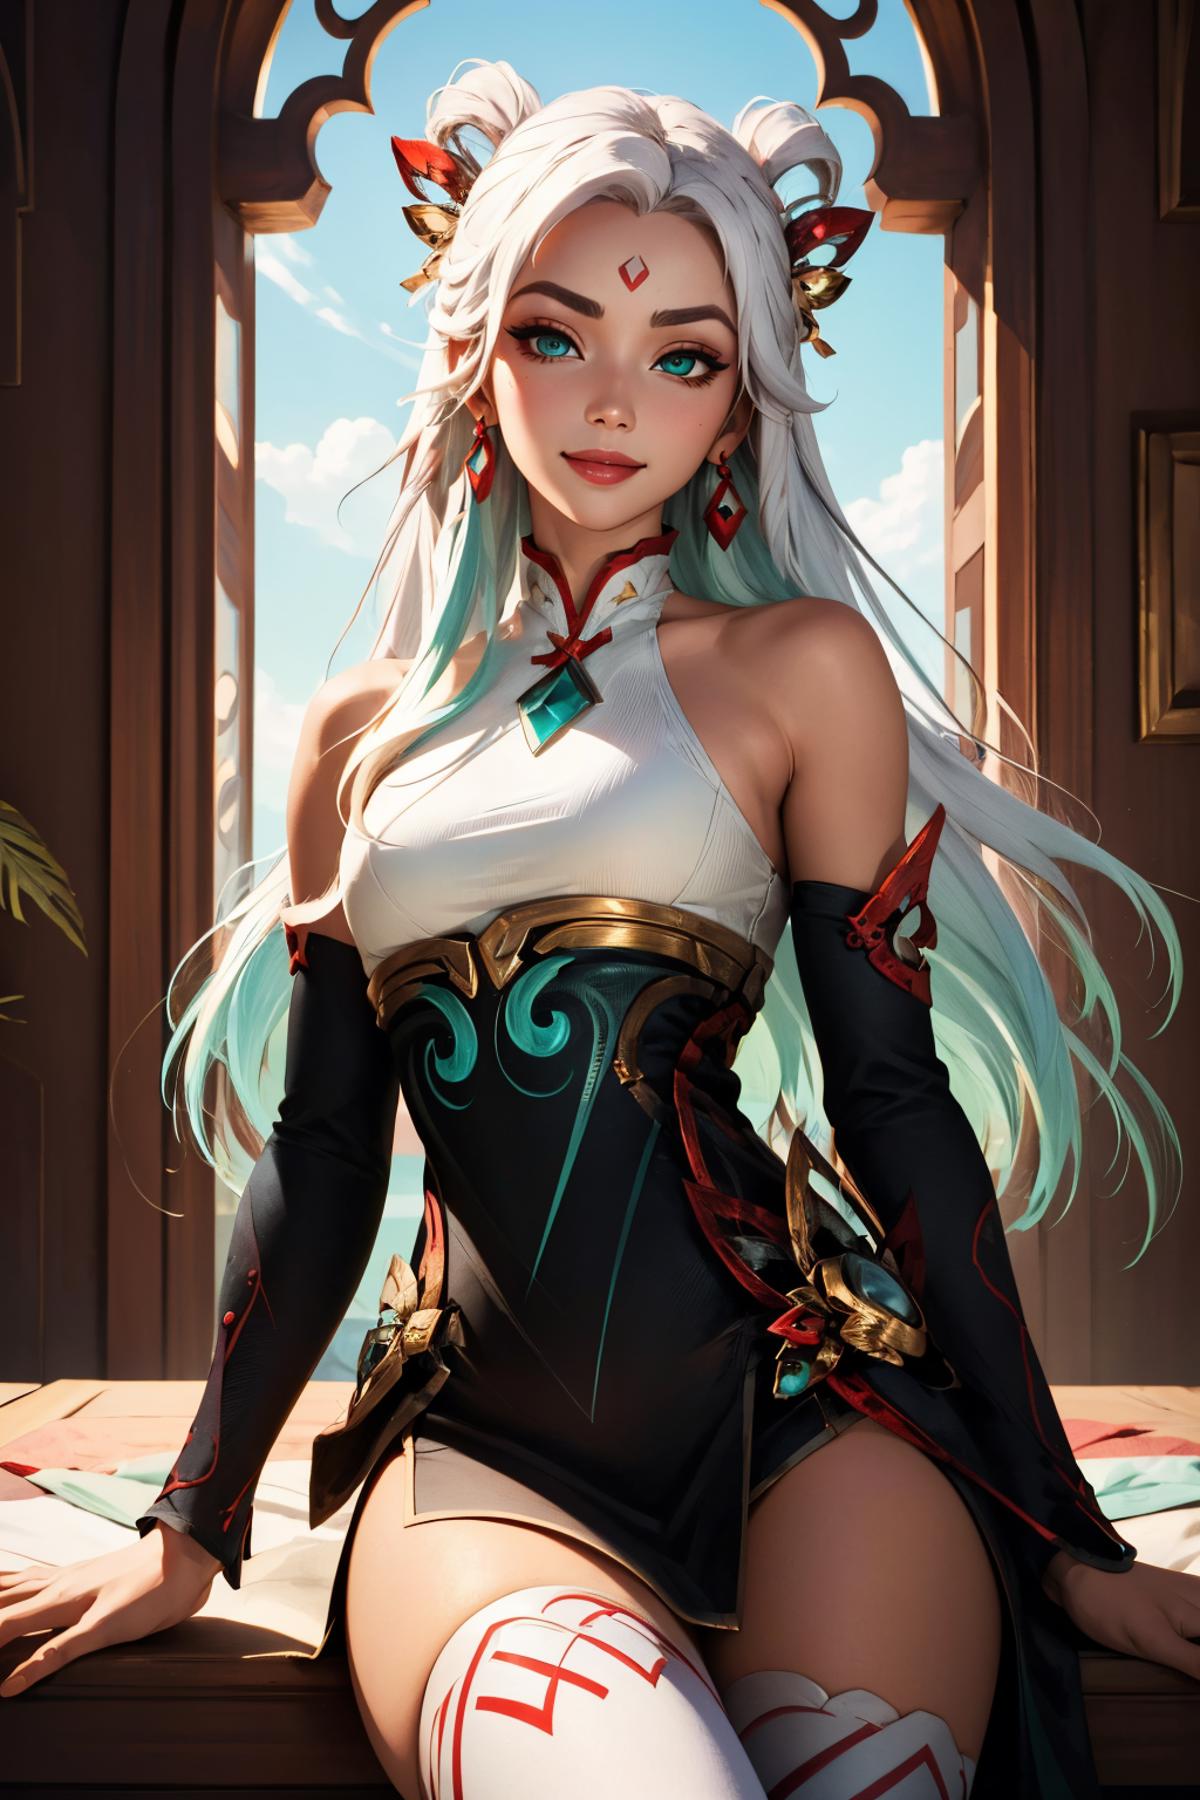 Mythmaker Irelia | League of Legends image by AhriMain